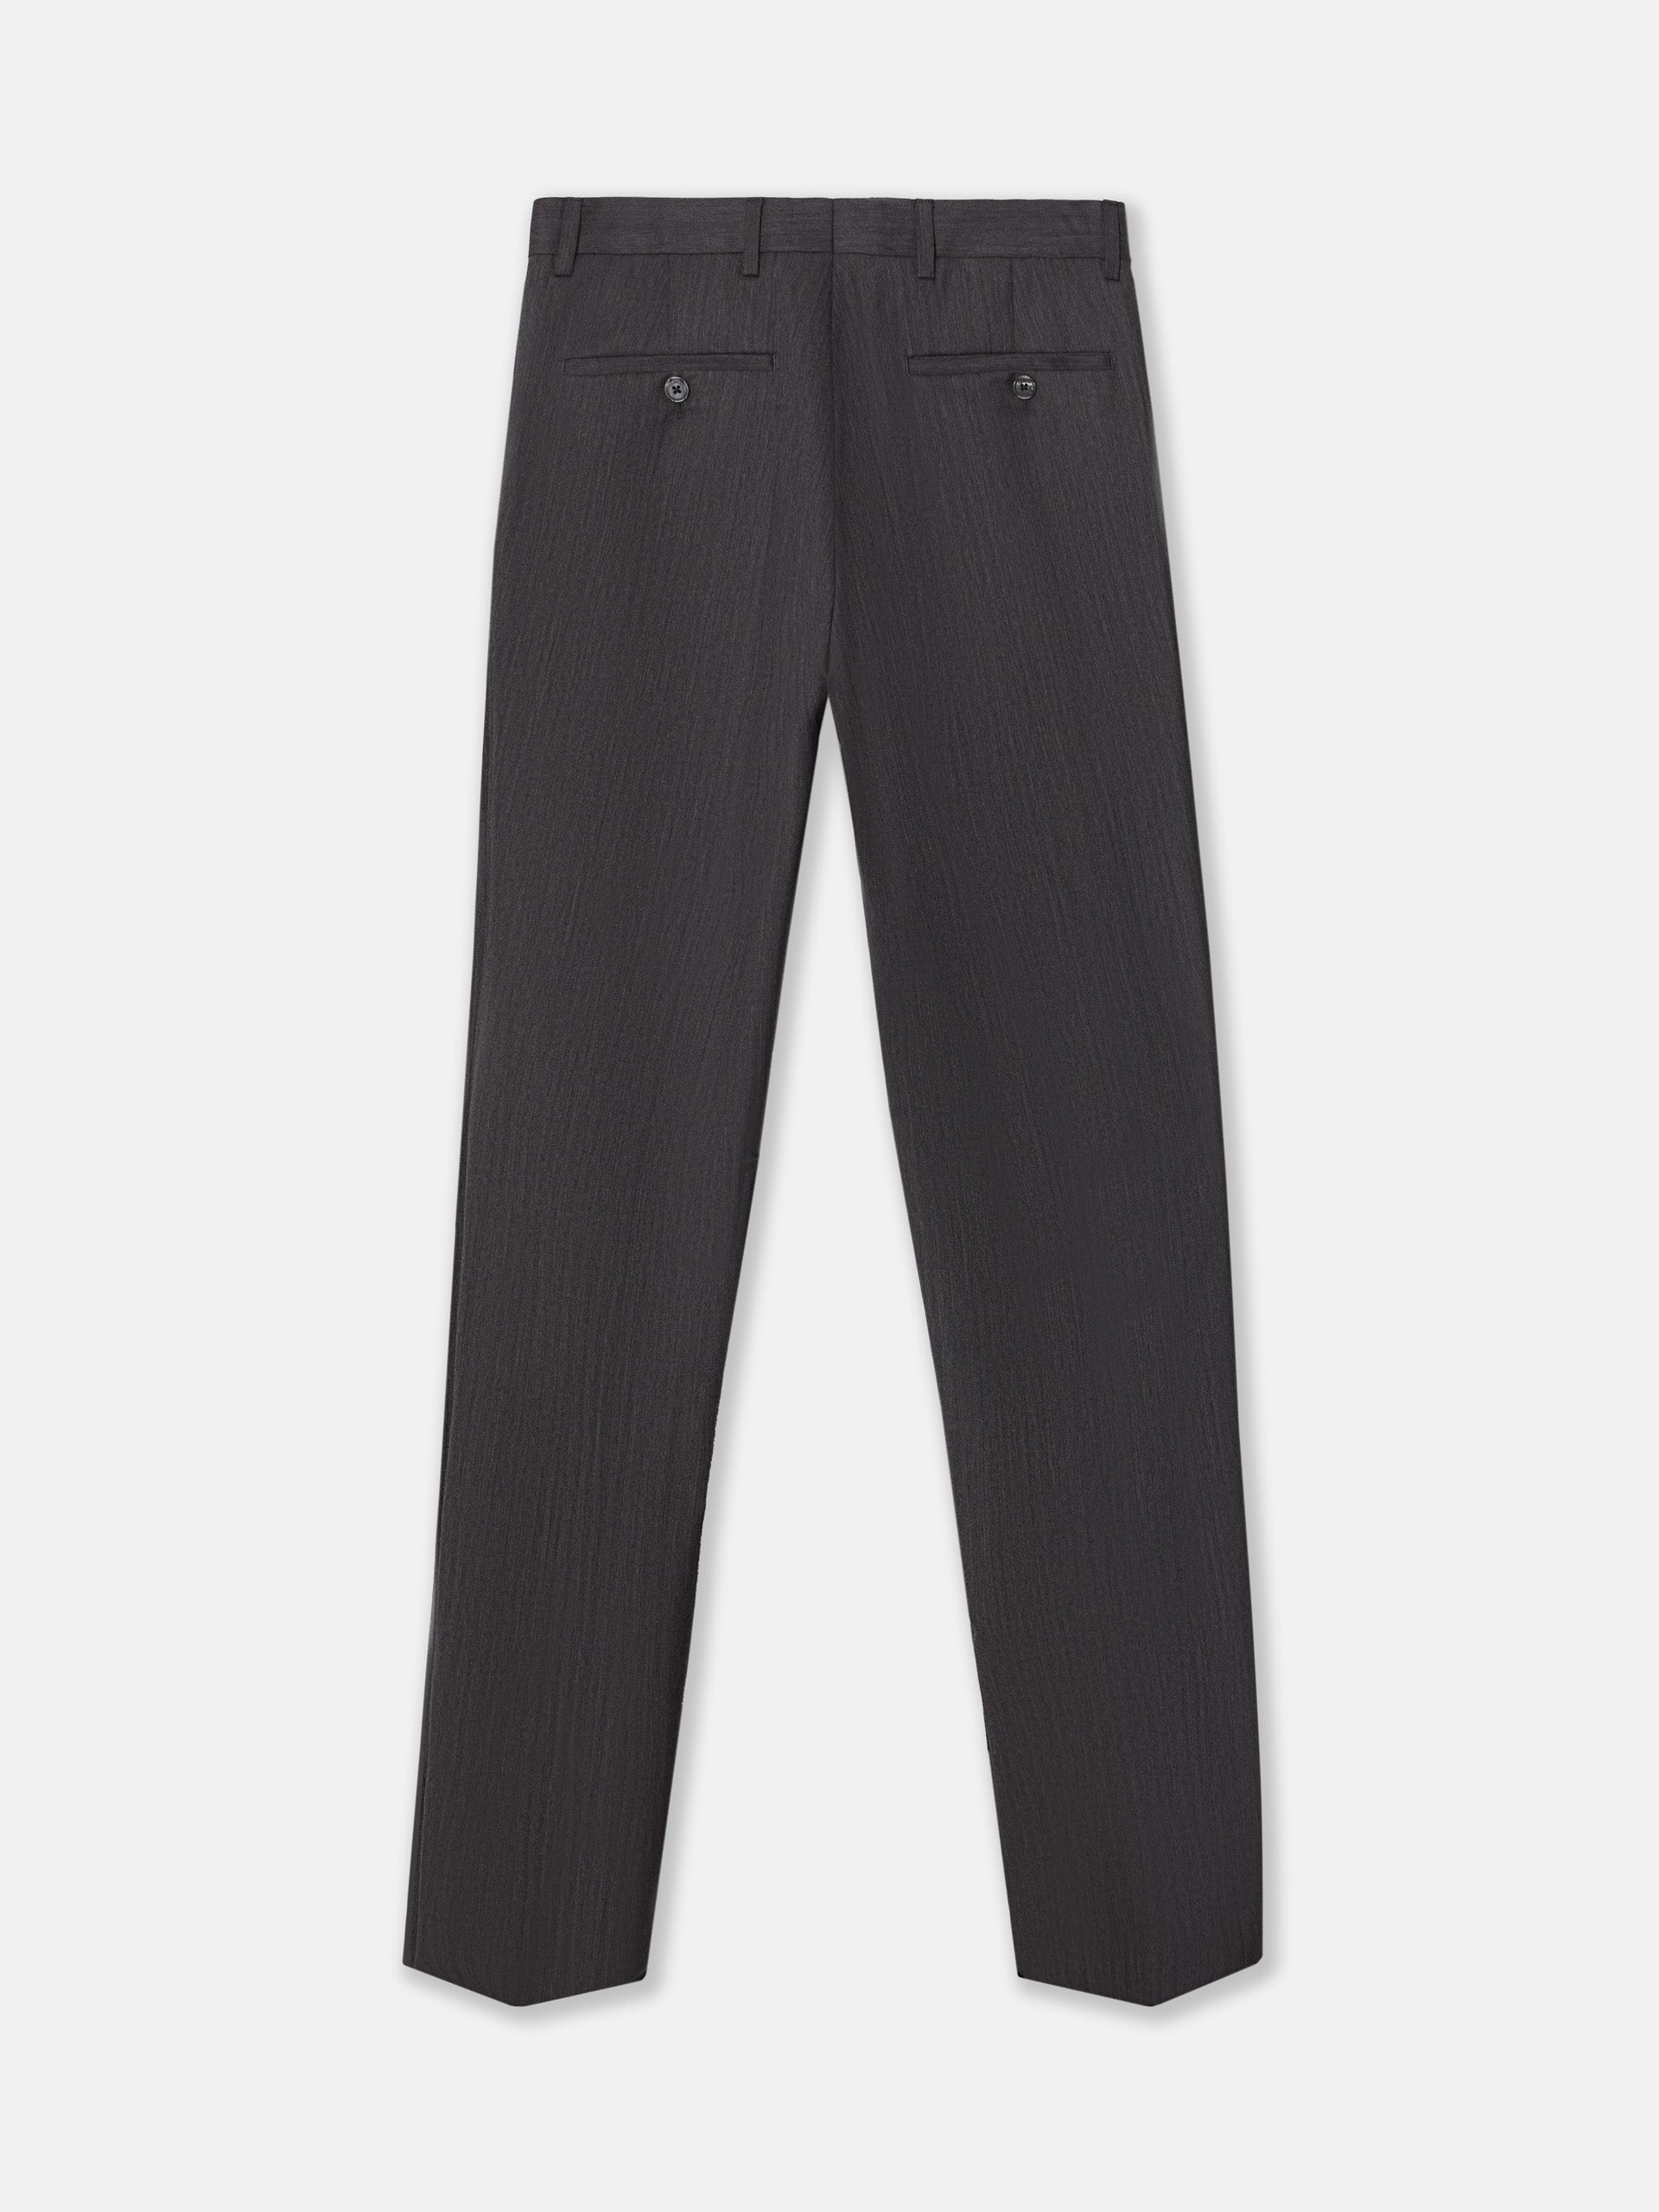 Classic gray herringbone suit pants